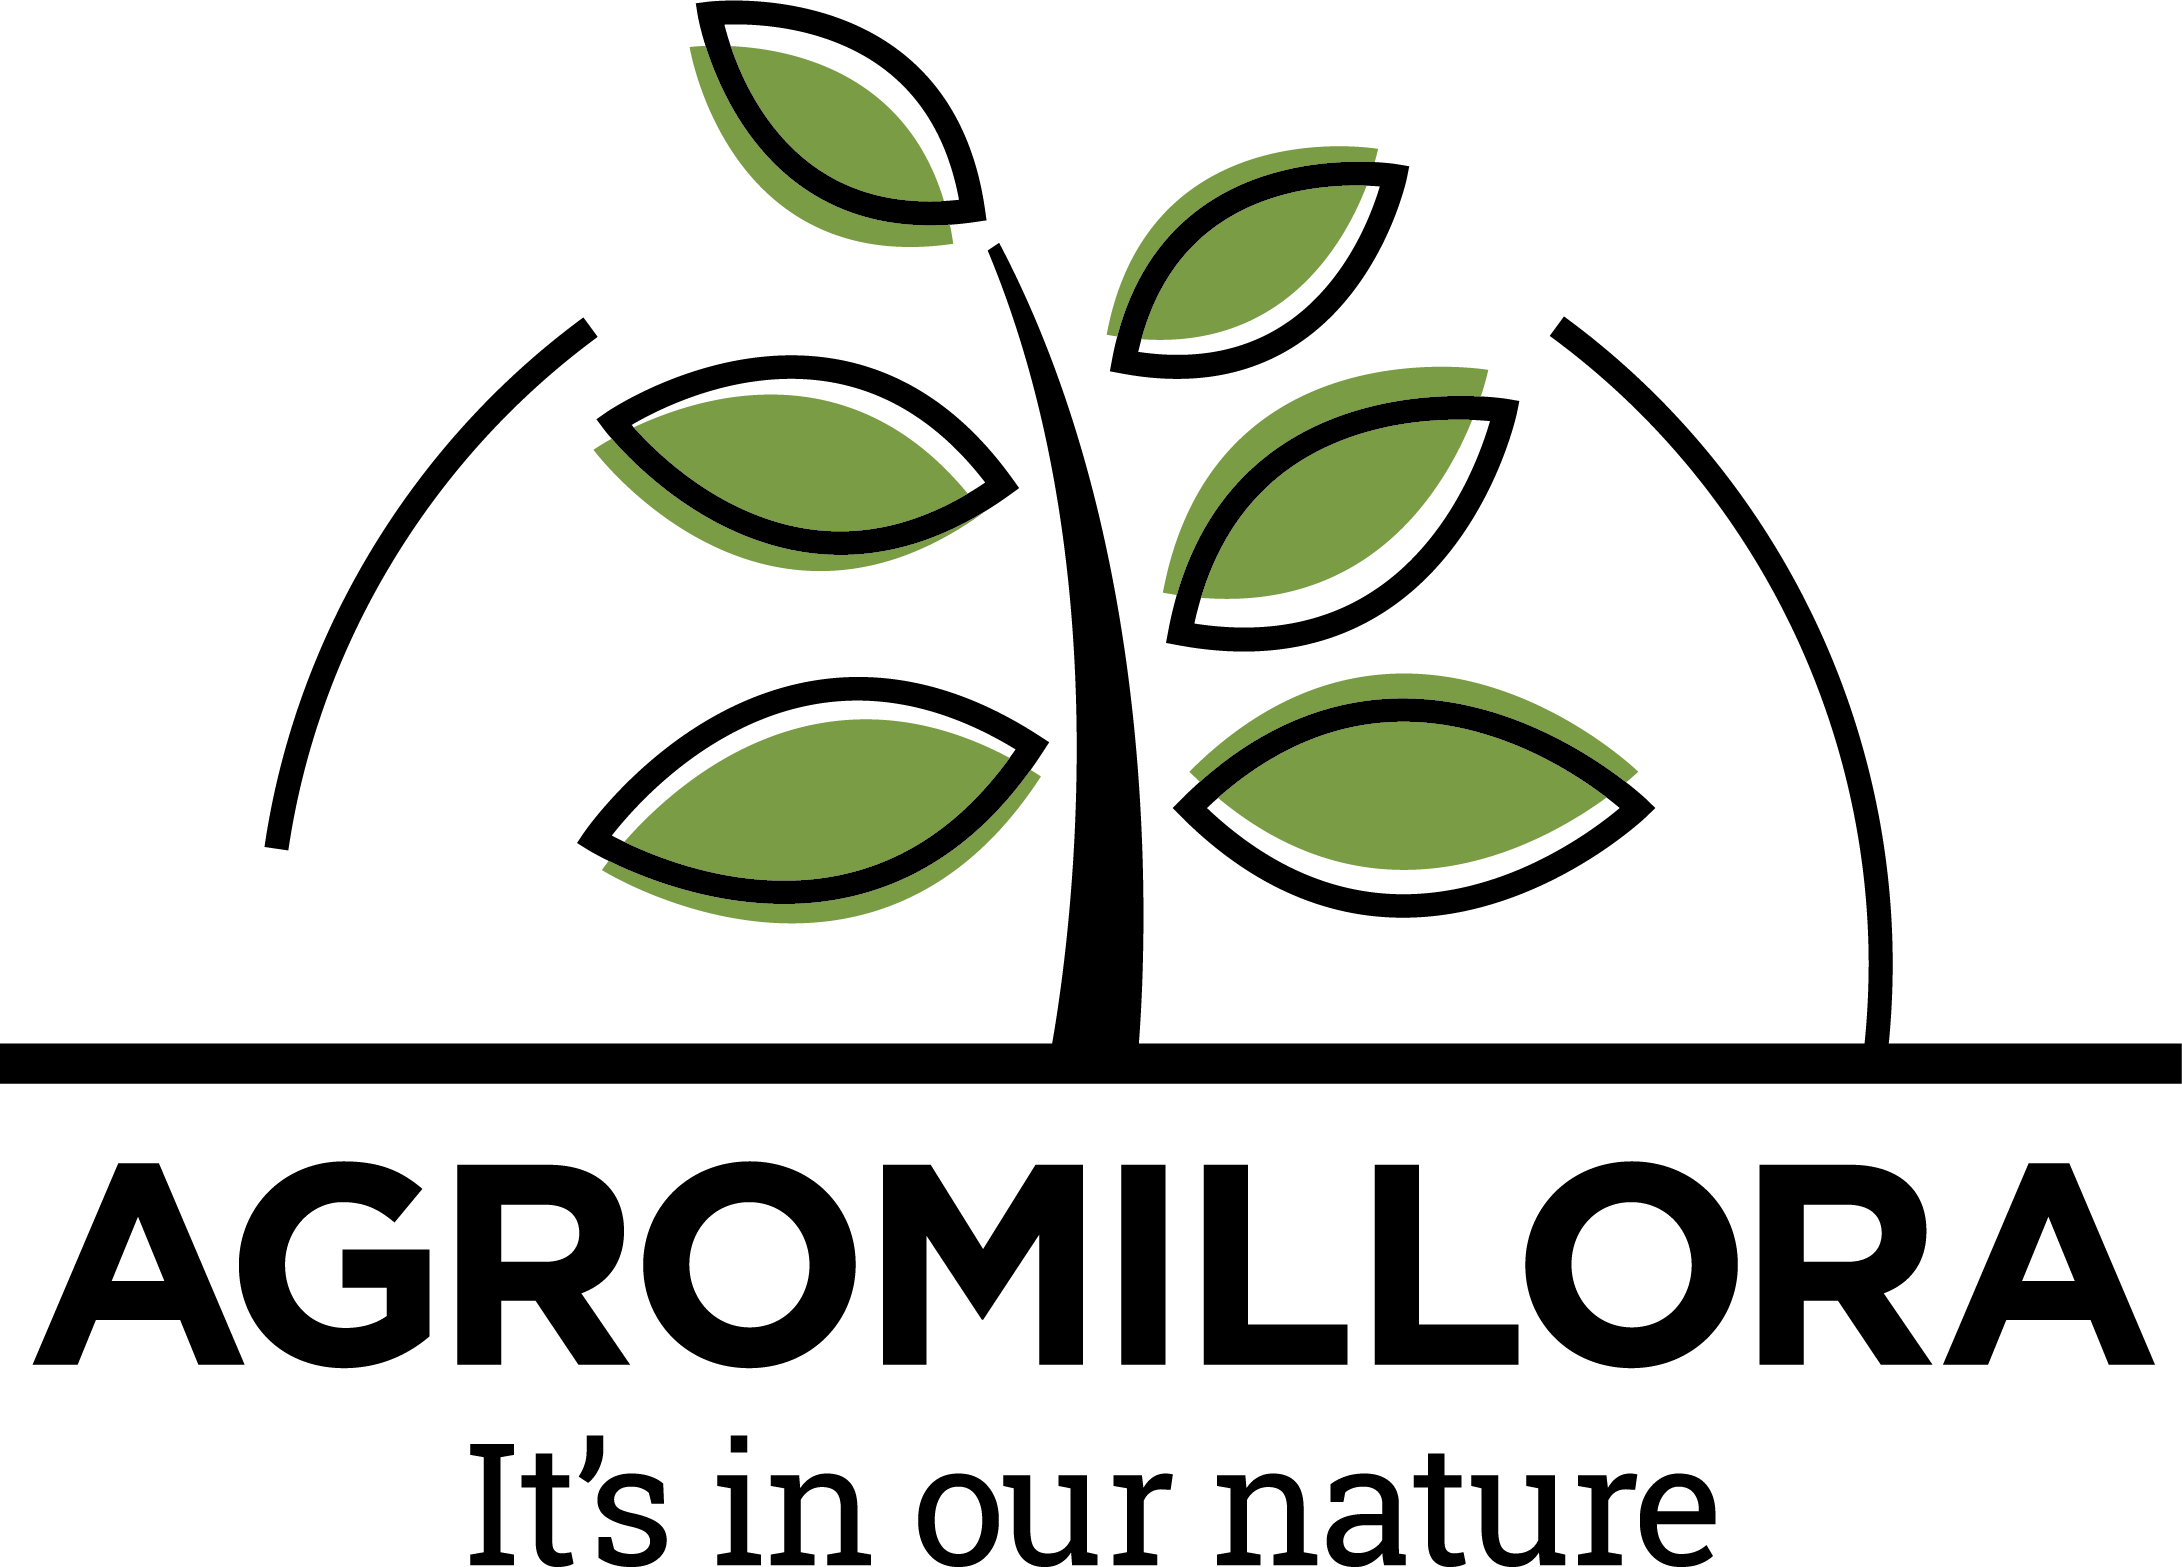 Agromillora logo png 130623